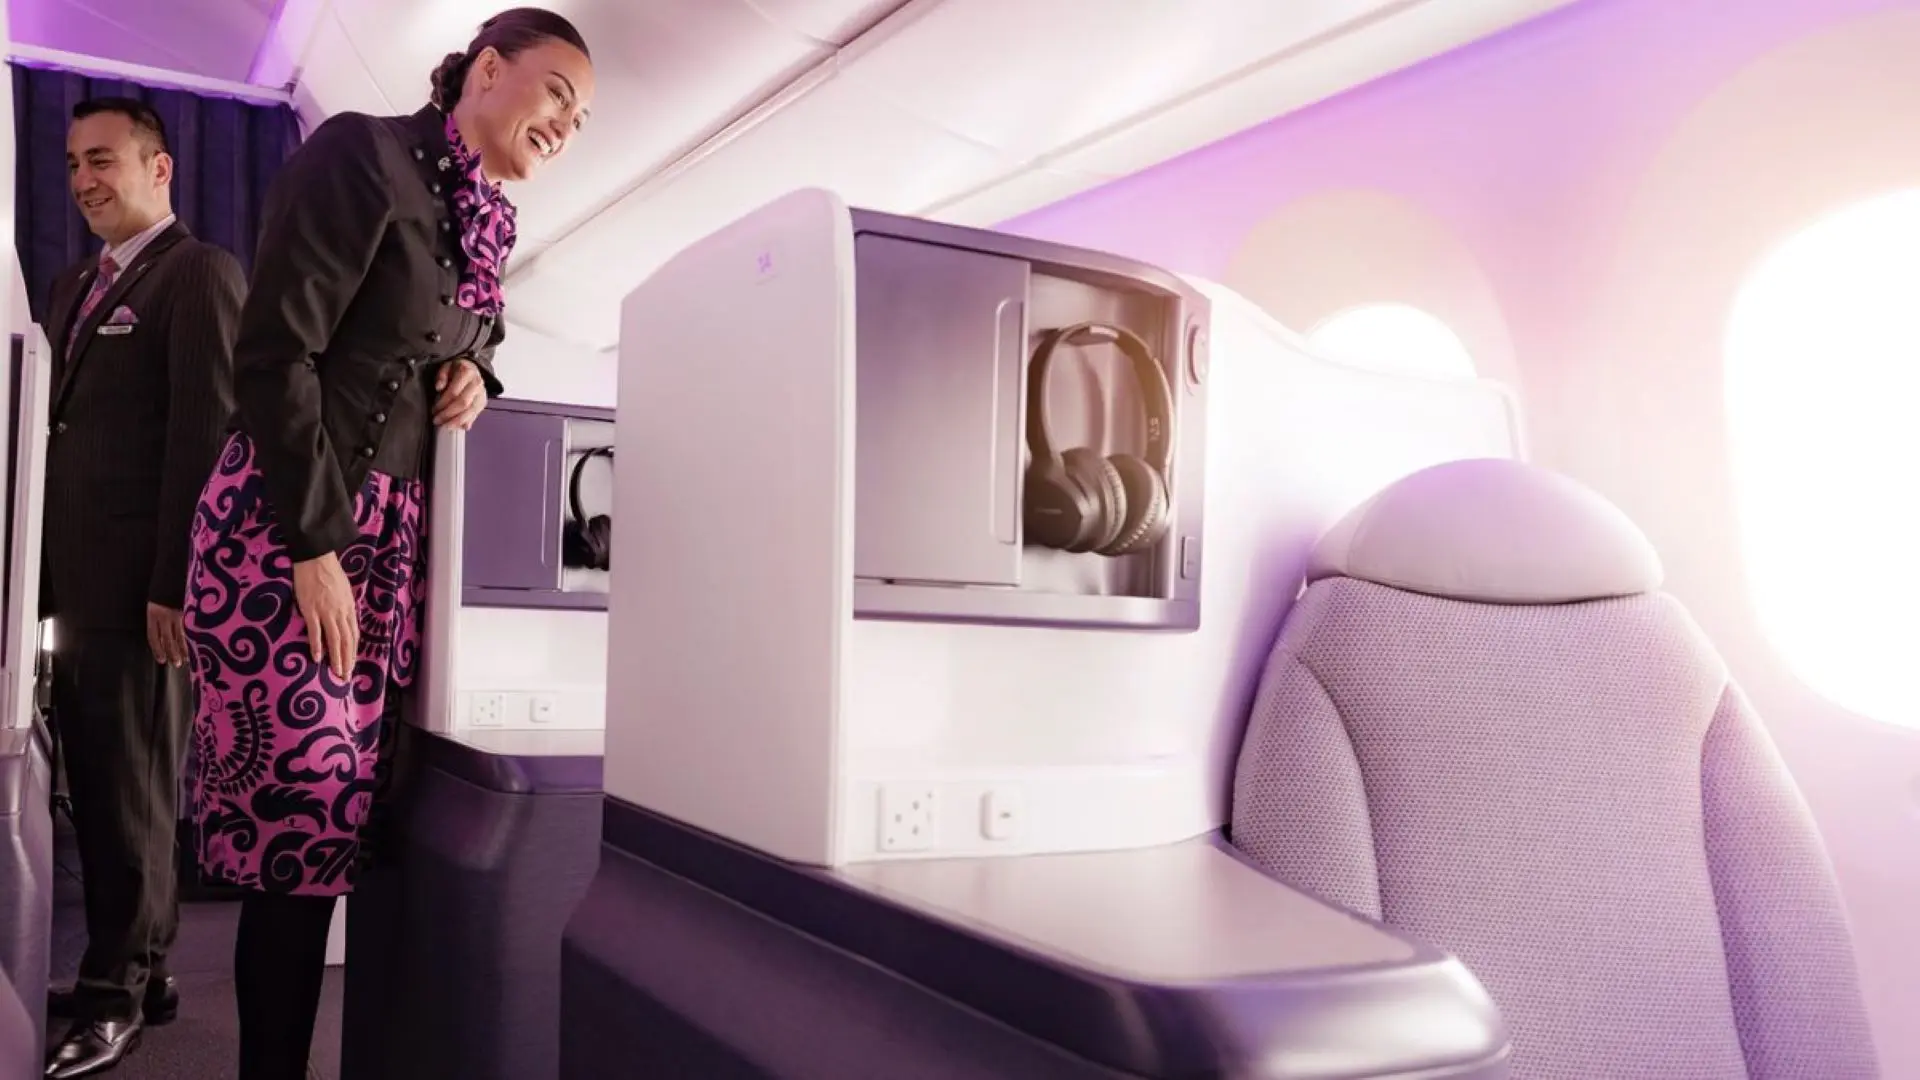 Airlines News - Air New Zealand’s new Dreamliner offers better sleep for Business Class passengers